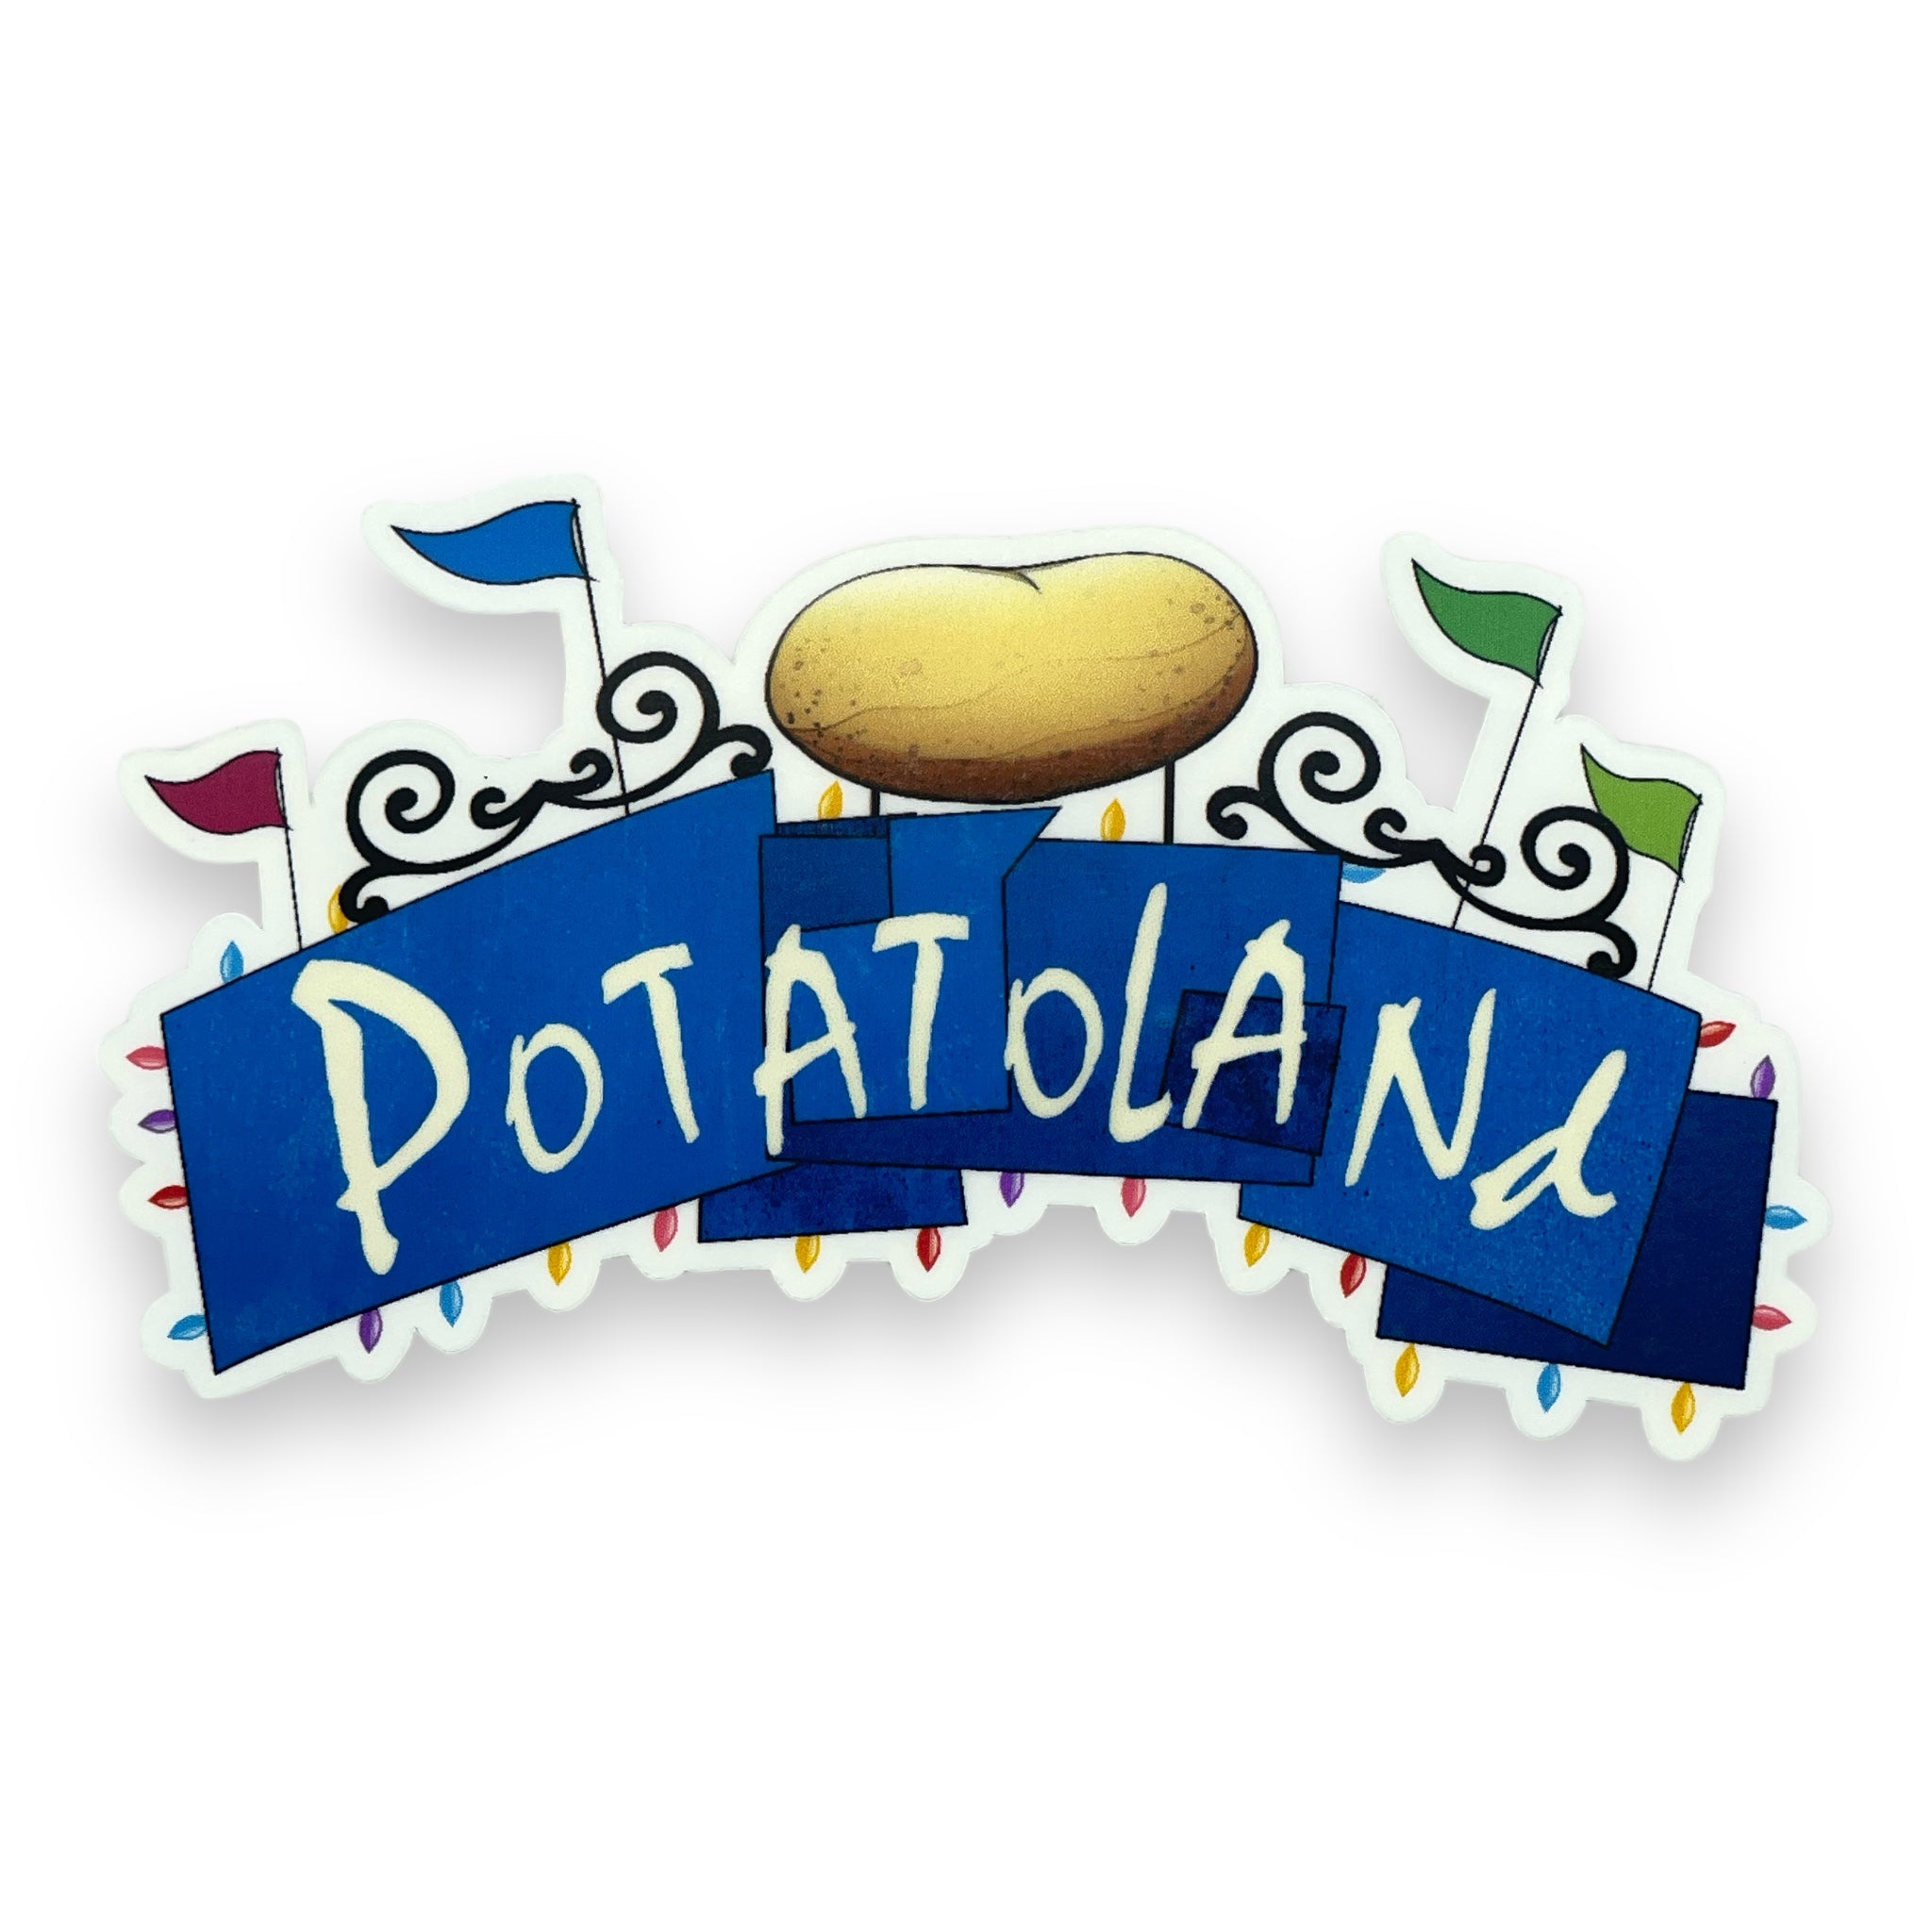 Potatoland Inspired Matte Finish Water-Resistant Sticker